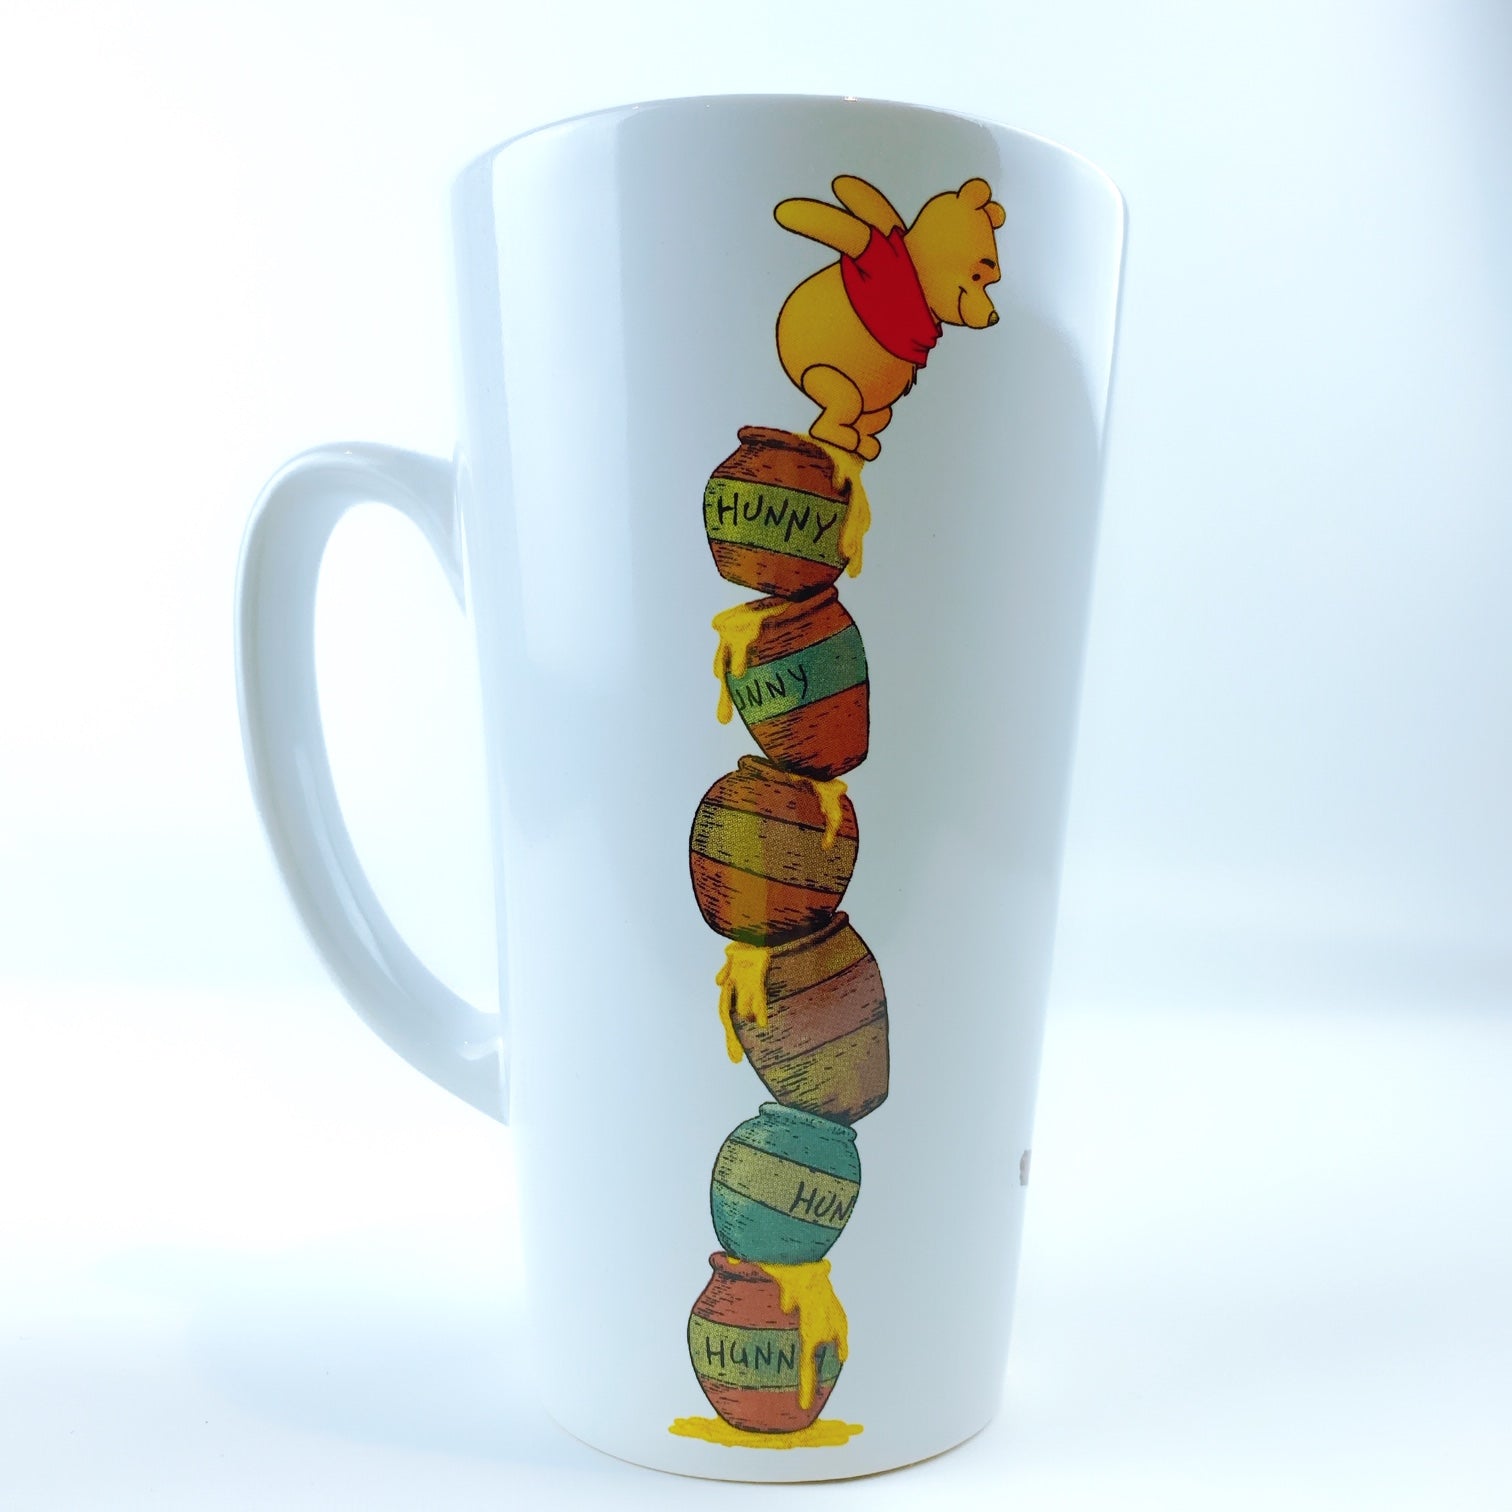 Large Coffee Mug, Tall Teal Coffee Mug 18 Oz, Tall Coffee Mug